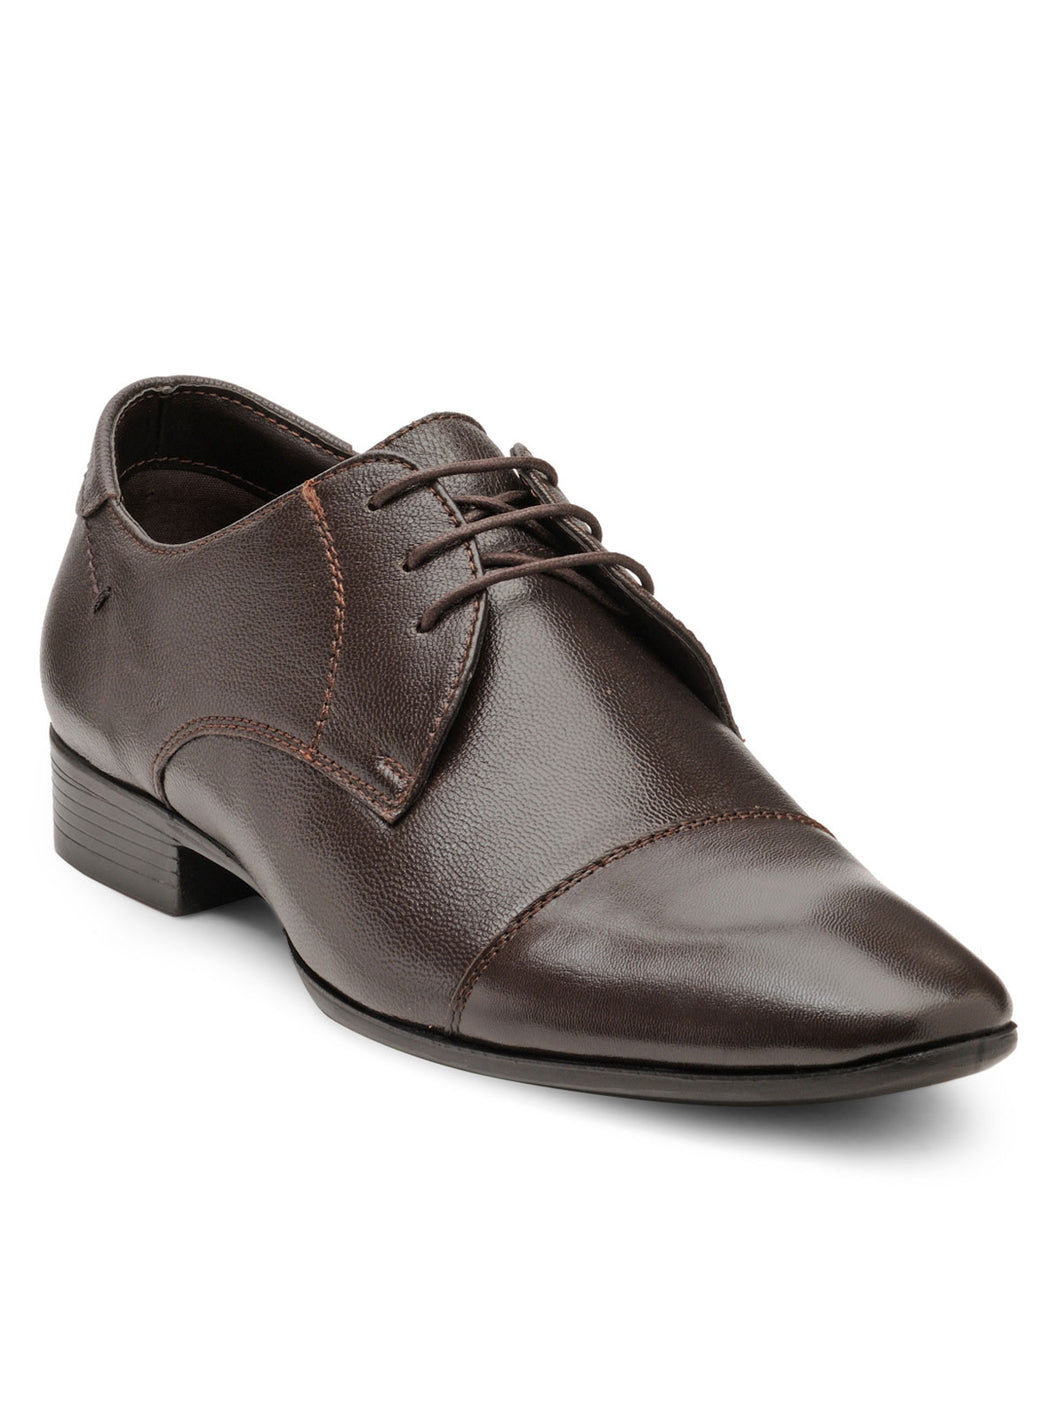 Teakwood Leather Men's Brown Derby Shoes